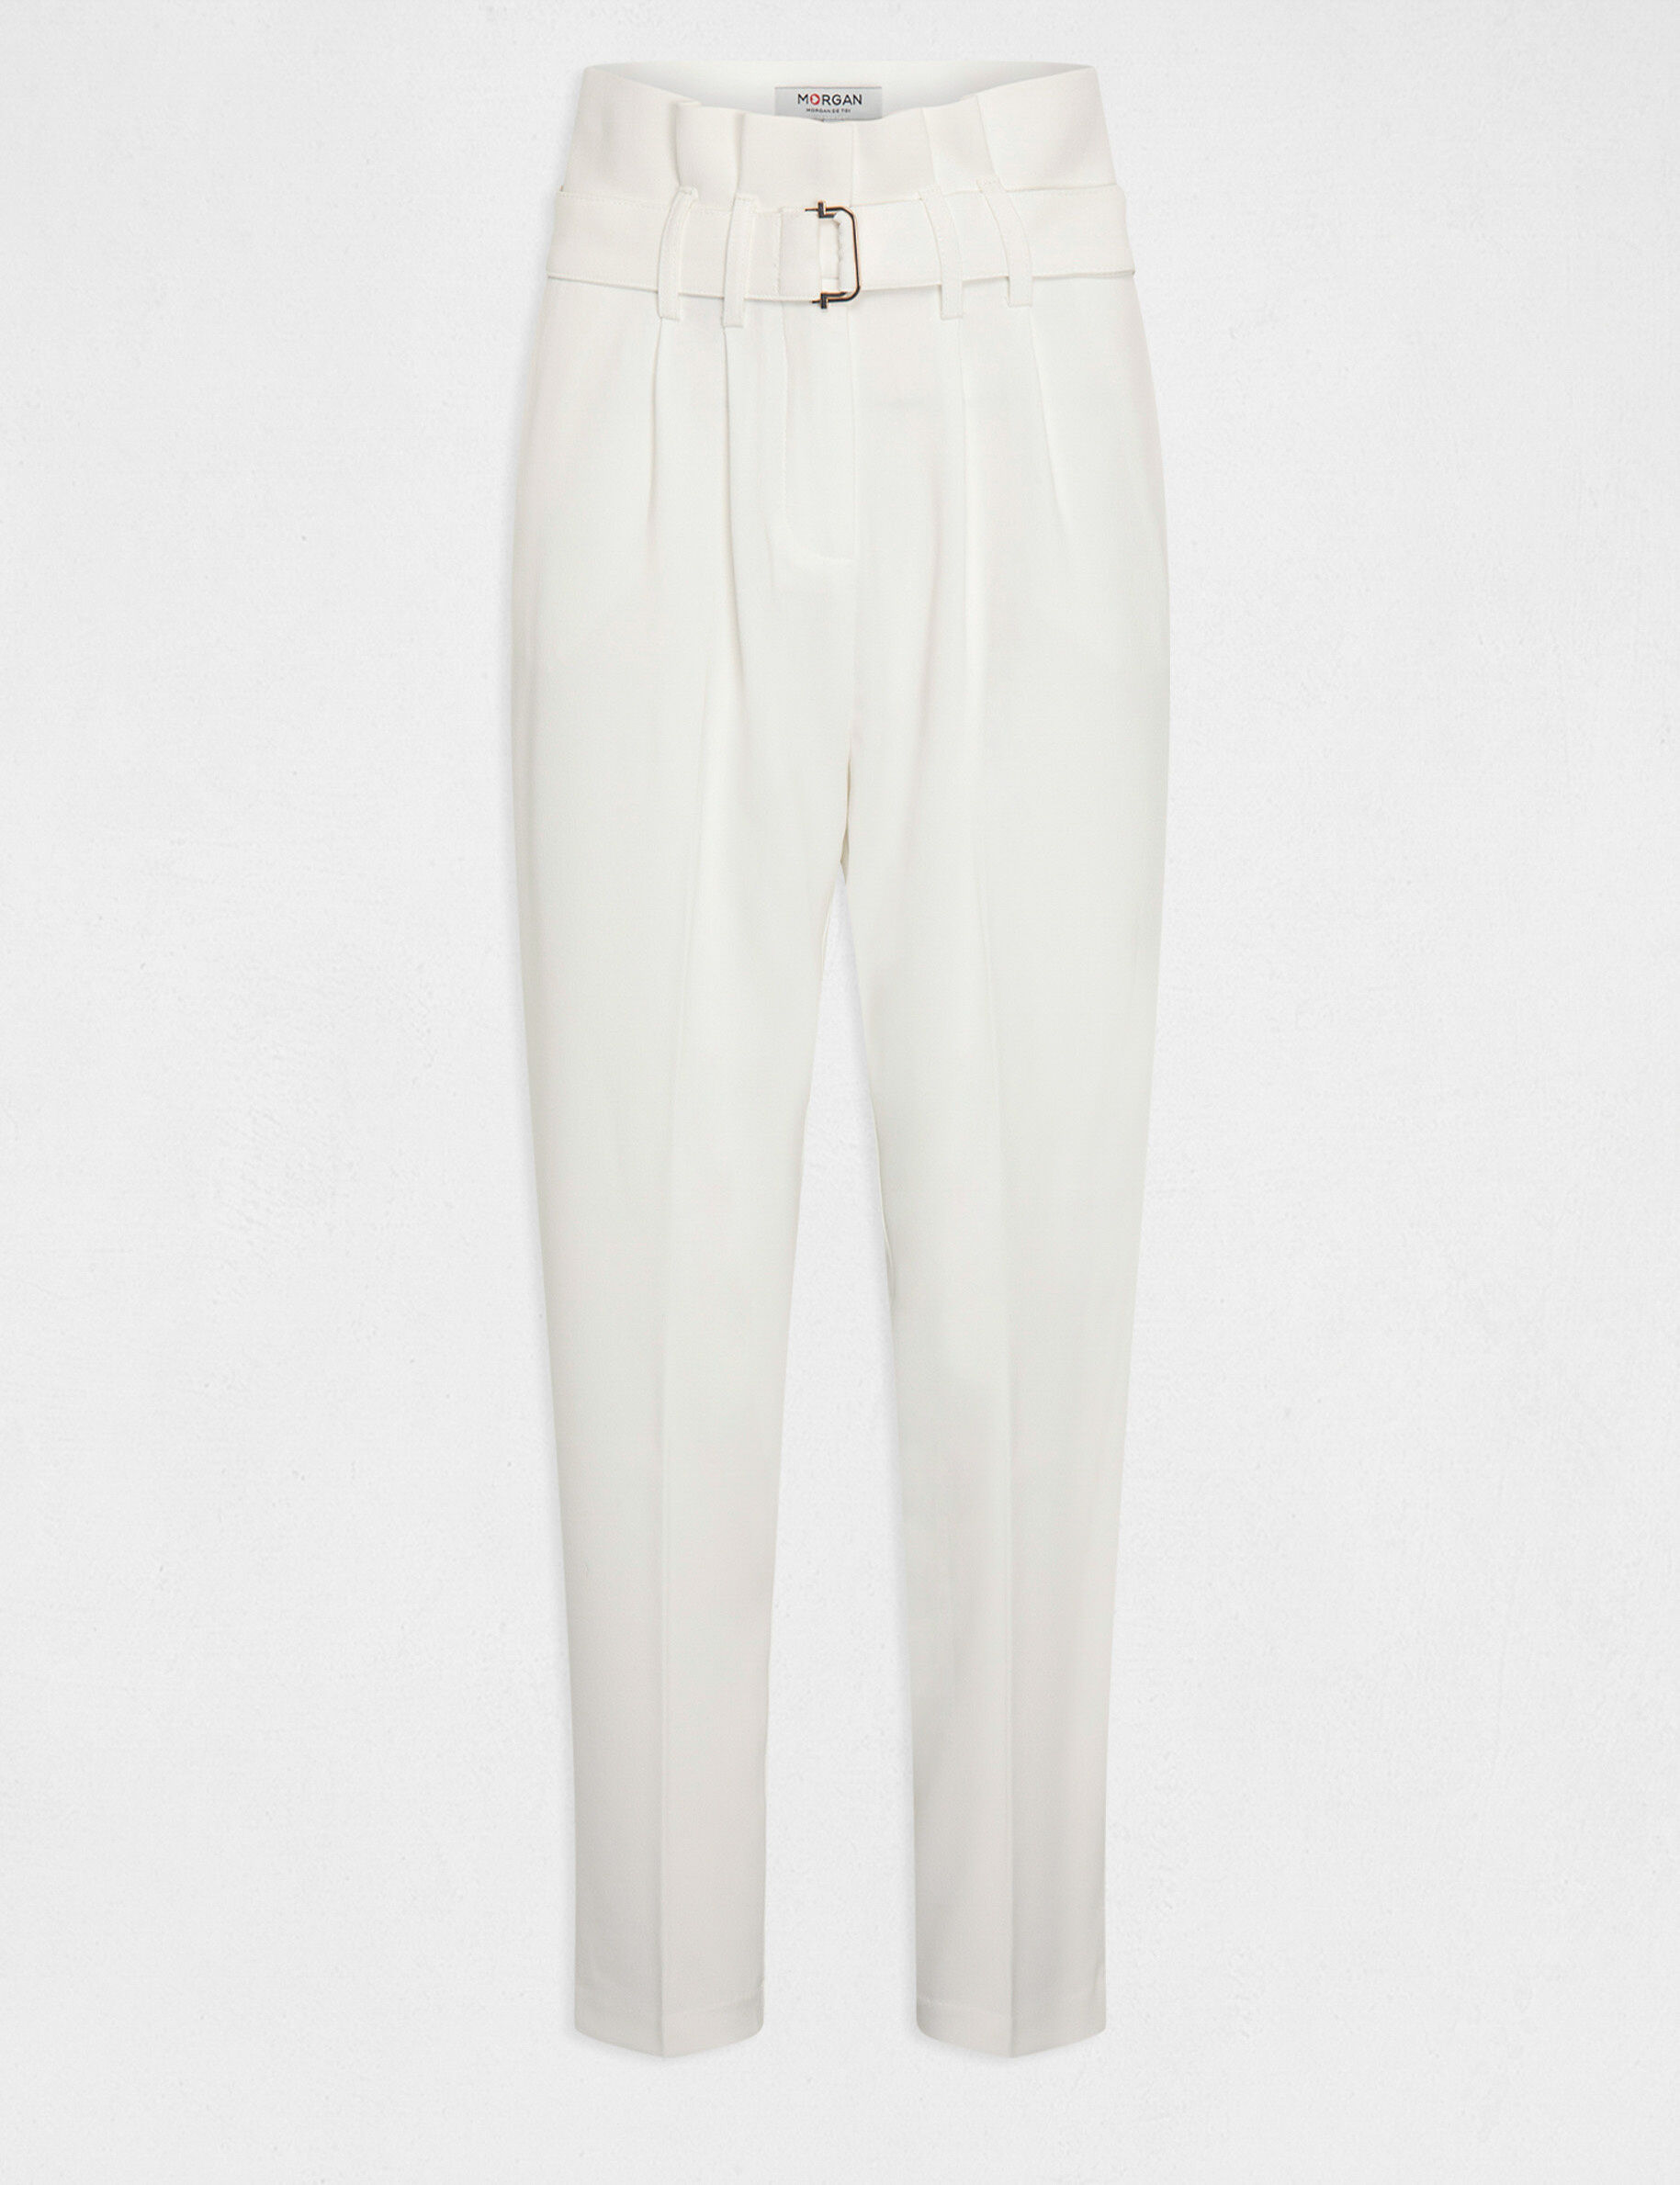 Buy Black  White Trousers  Pants for Women by Vero Moda Online  Ajiocom